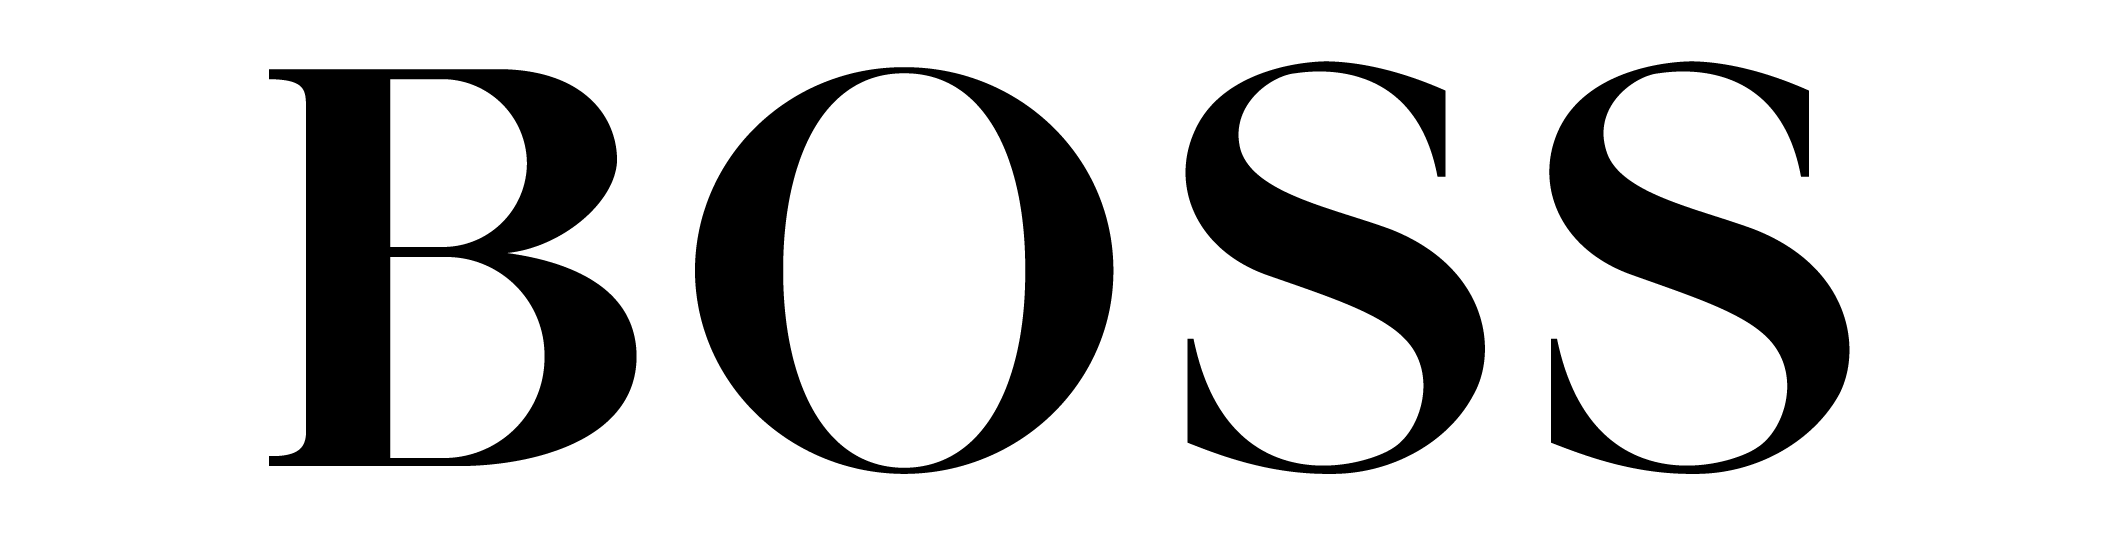 logo nước hoa Pháp BOSS